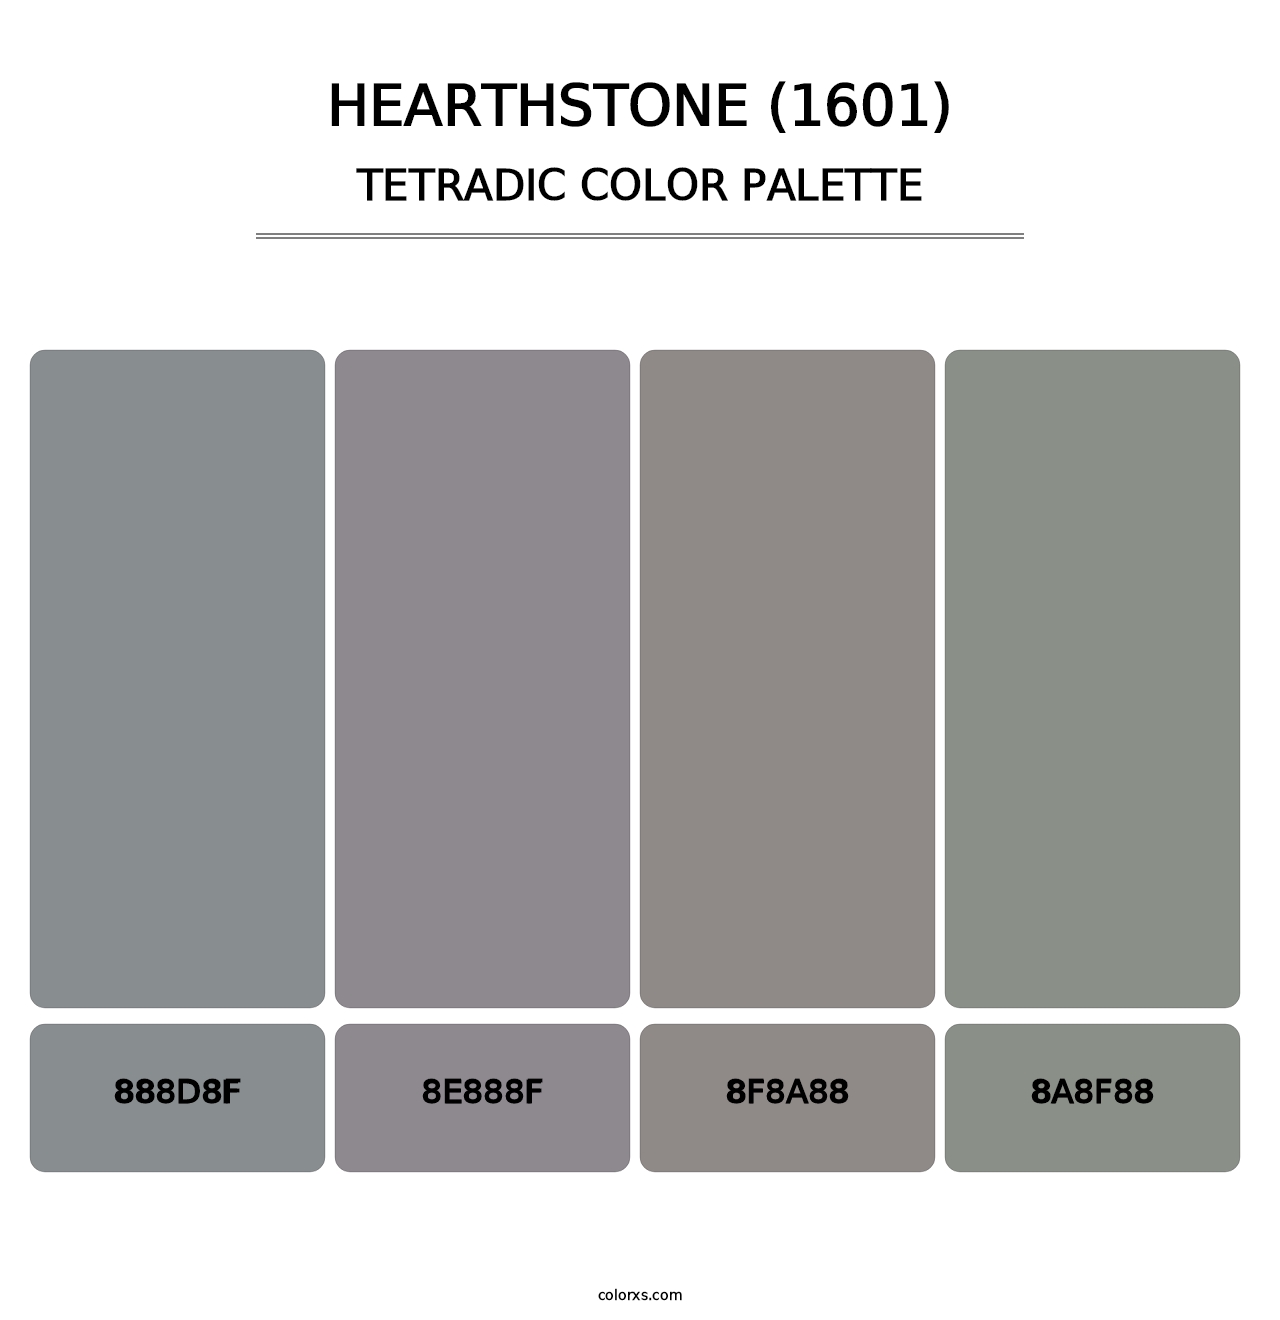 Hearthstone (1601) - Tetradic Color Palette